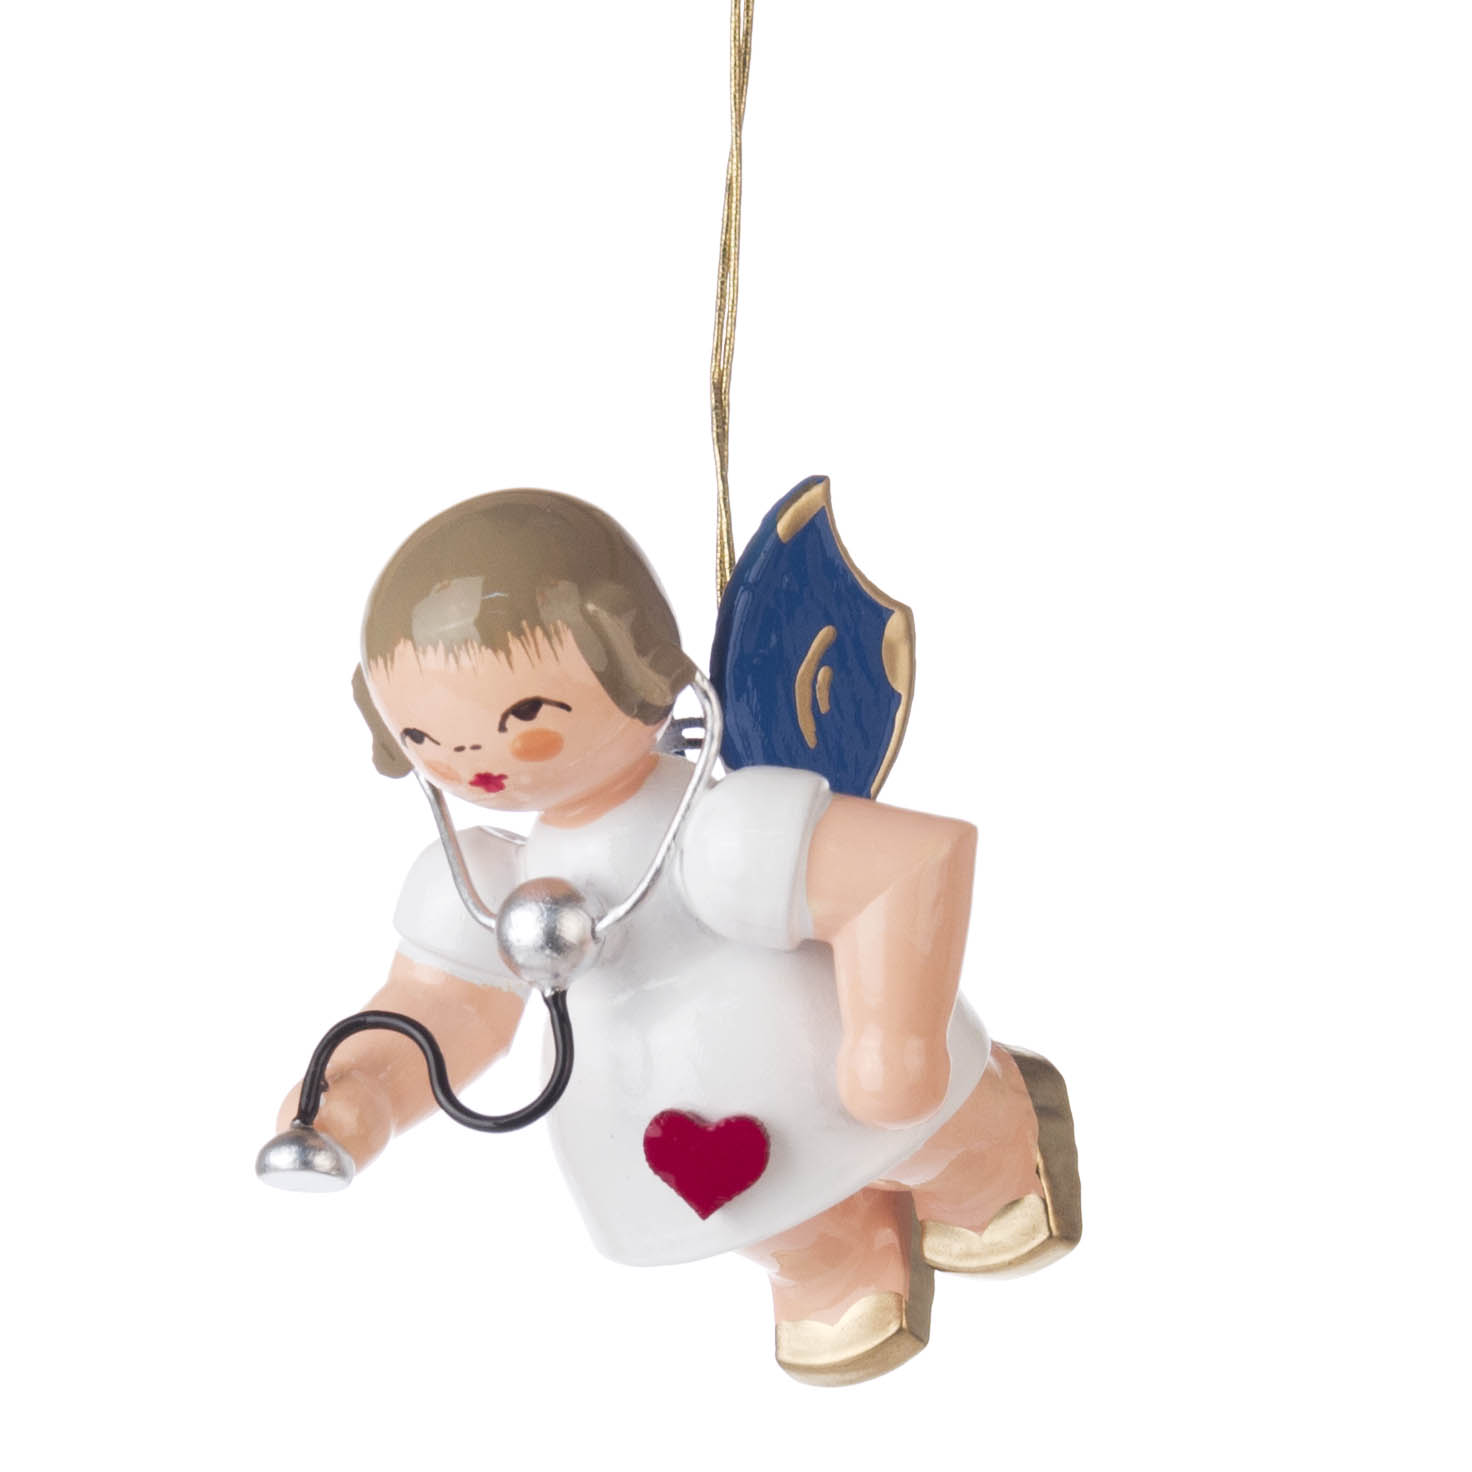 Behang Herzengel mit Stethoskop, blaue Flügel im Dregeno Online Shop günstig kaufen